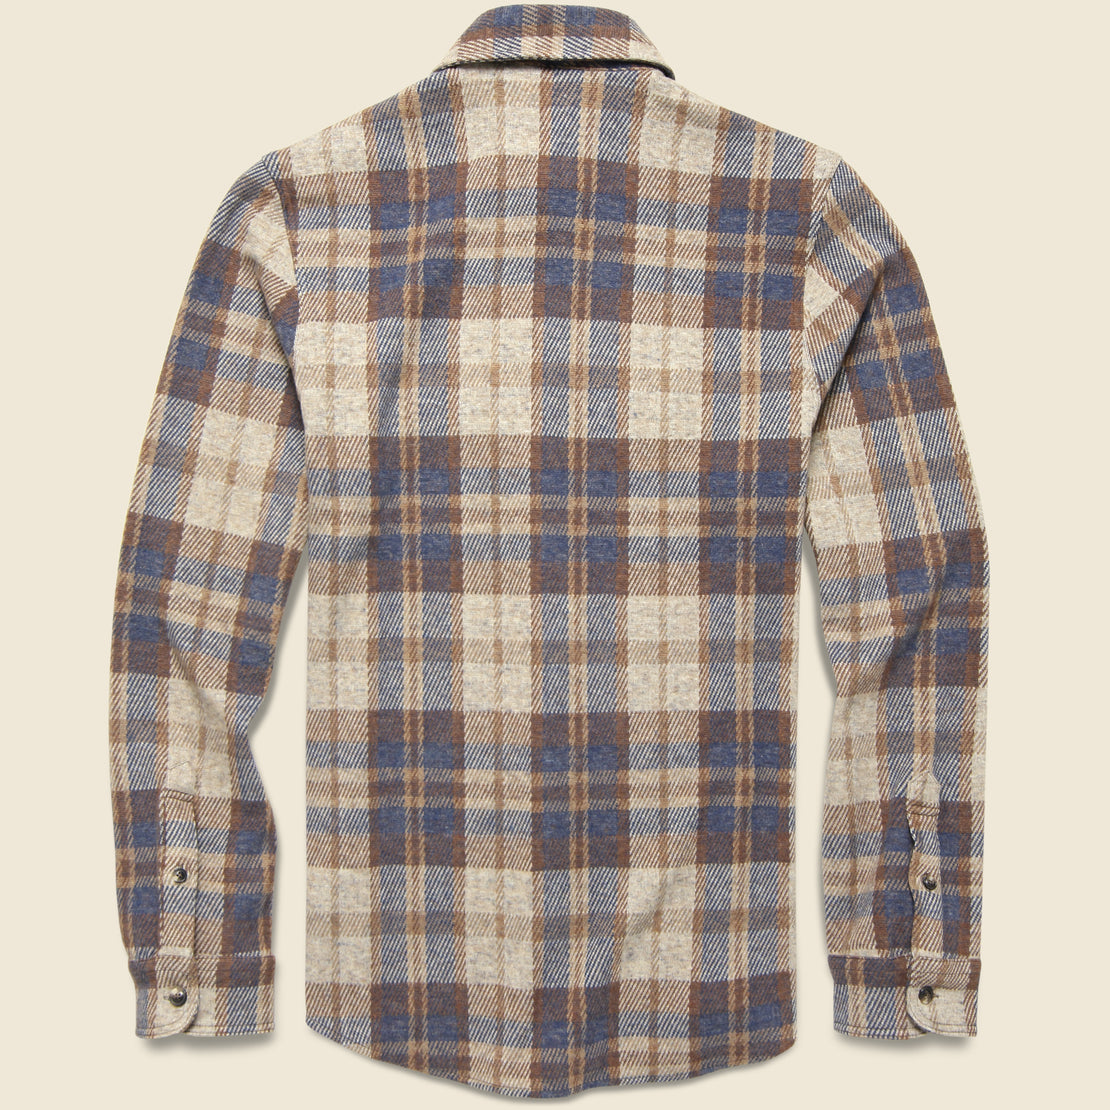 Legend Sweater Shirt - Bozeman Plaid - Faherty - STAG Provisions - Tops - L/S Woven - Plaid